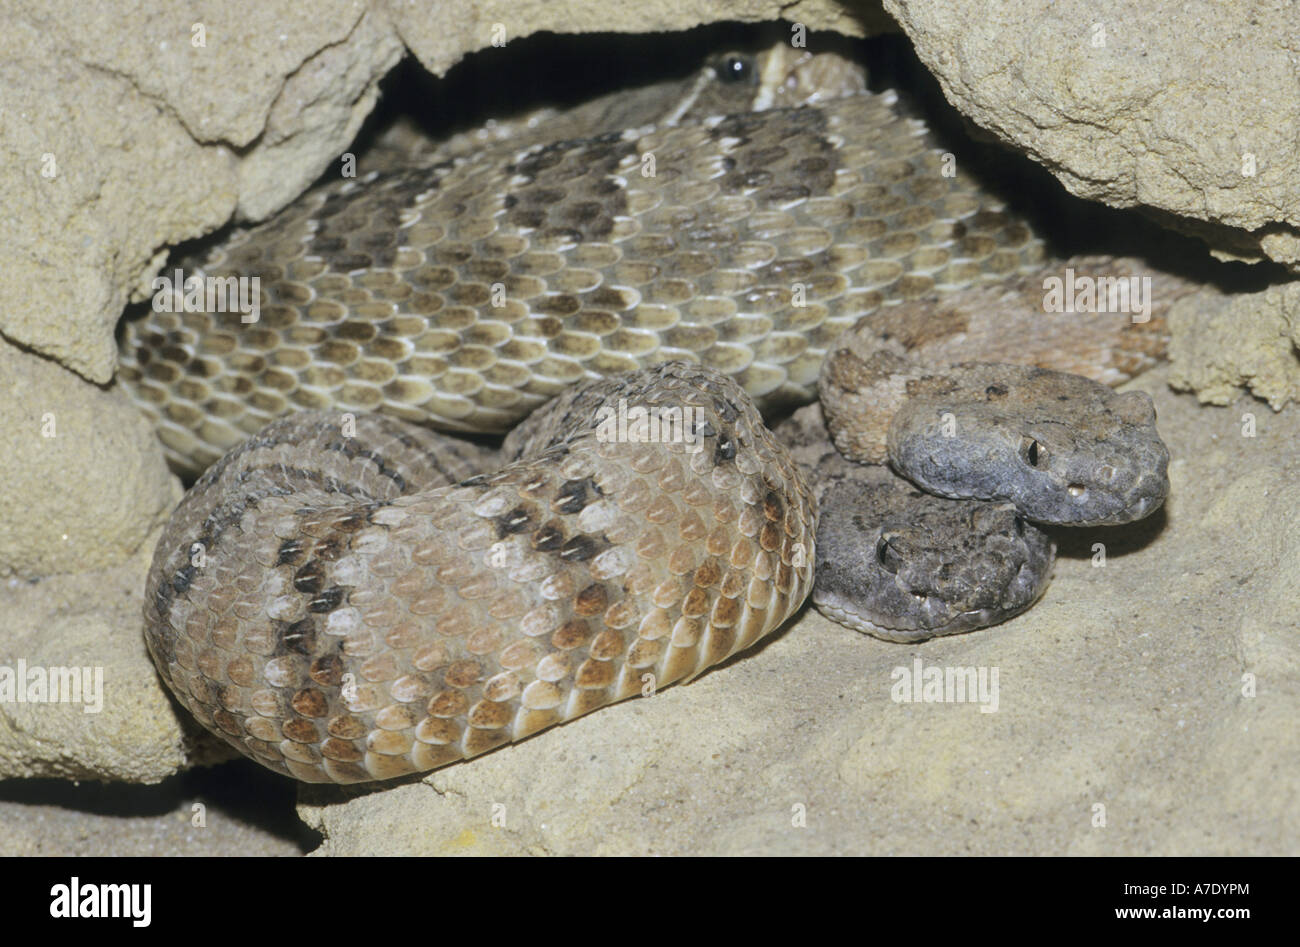 western rattlesnake (Crotalus viridis), two individuals, USA Stock Photo